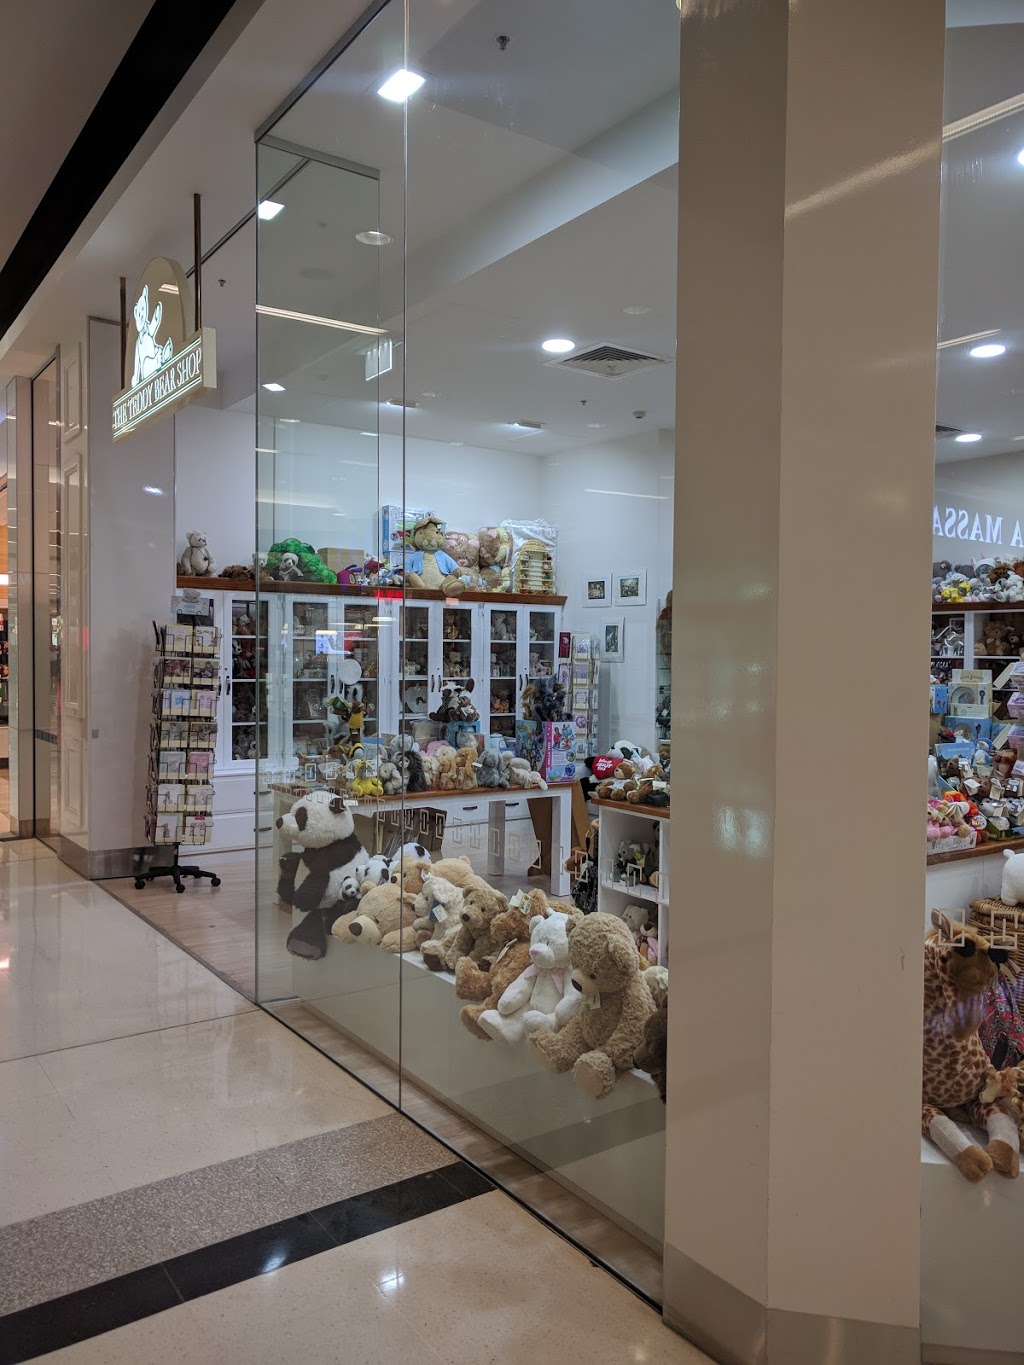 The Teddy Bear Shop | store | TN09 Majura Park Shopping Centre, 18-26 Spitfire Avenue, Majura ACT 2609, Australia | 0262576966 OR +61 2 6257 6966